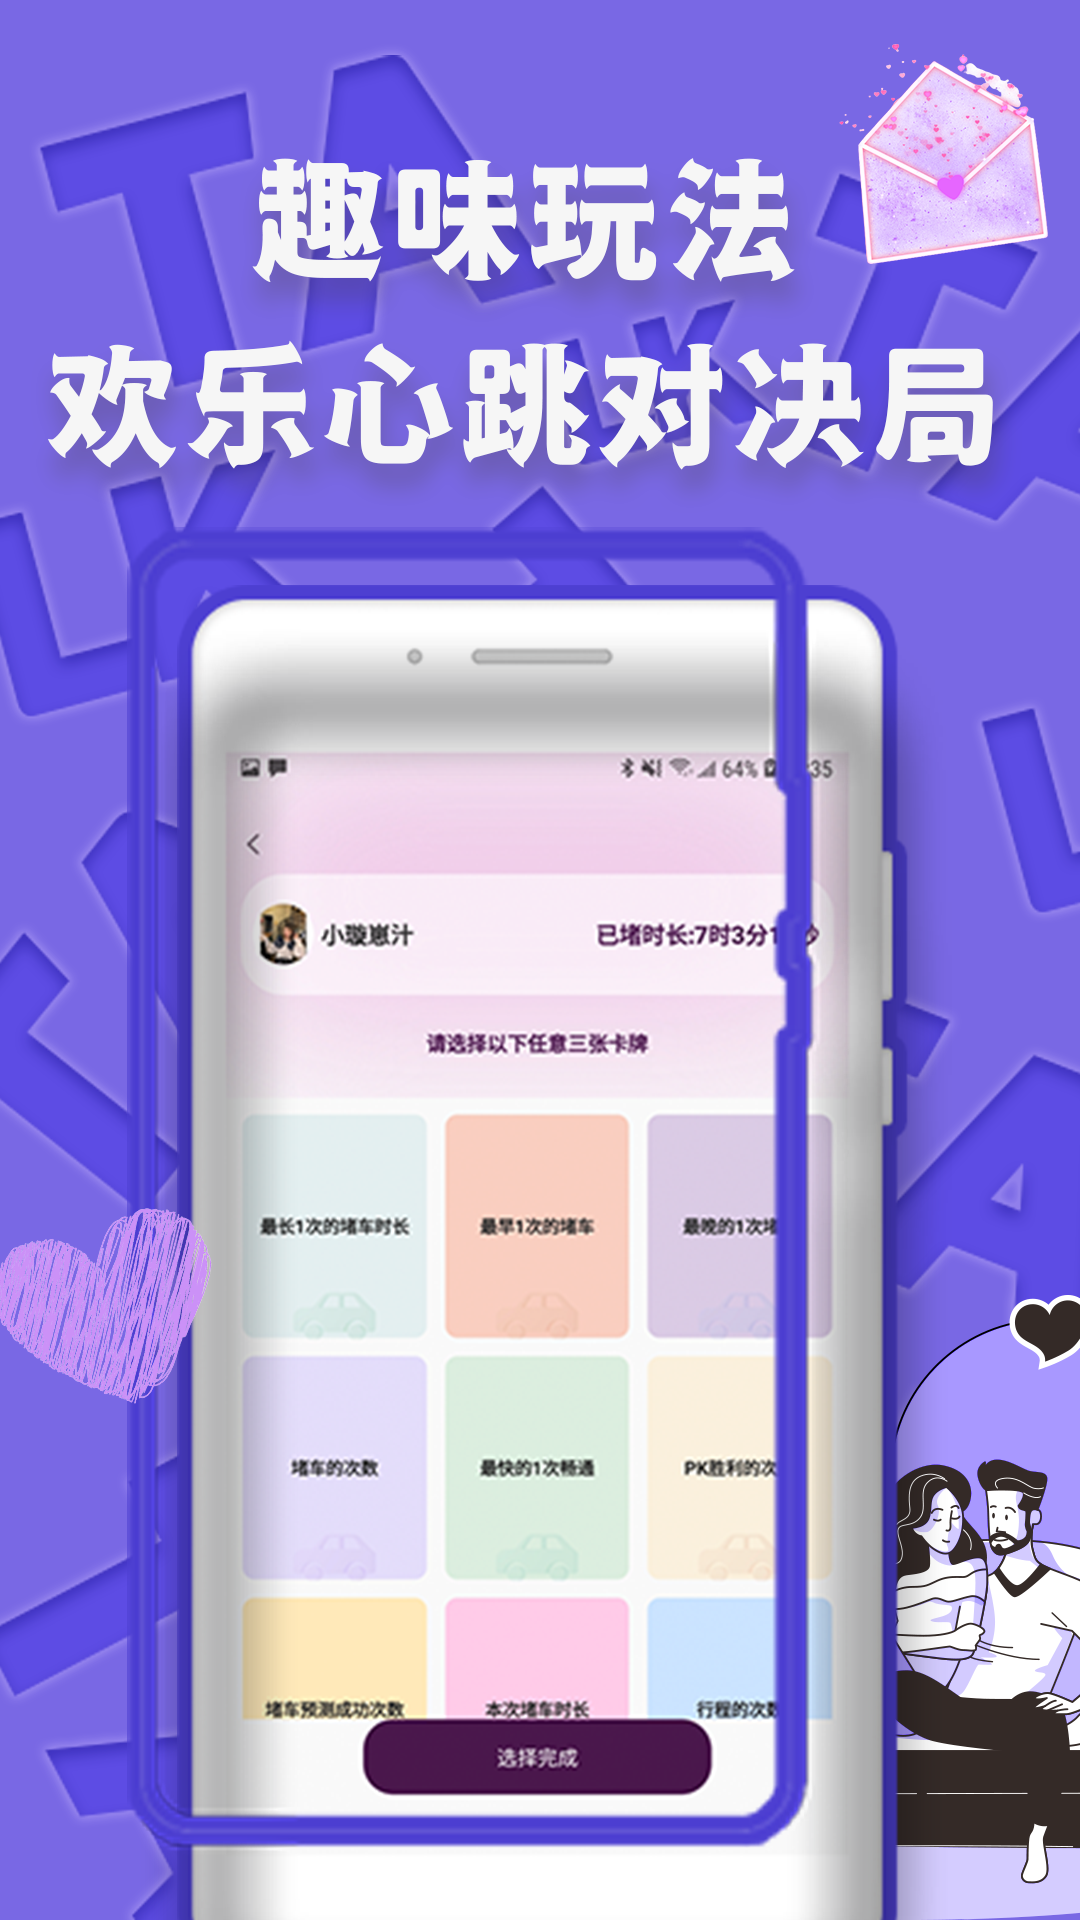 伴欣社app官方版图1: